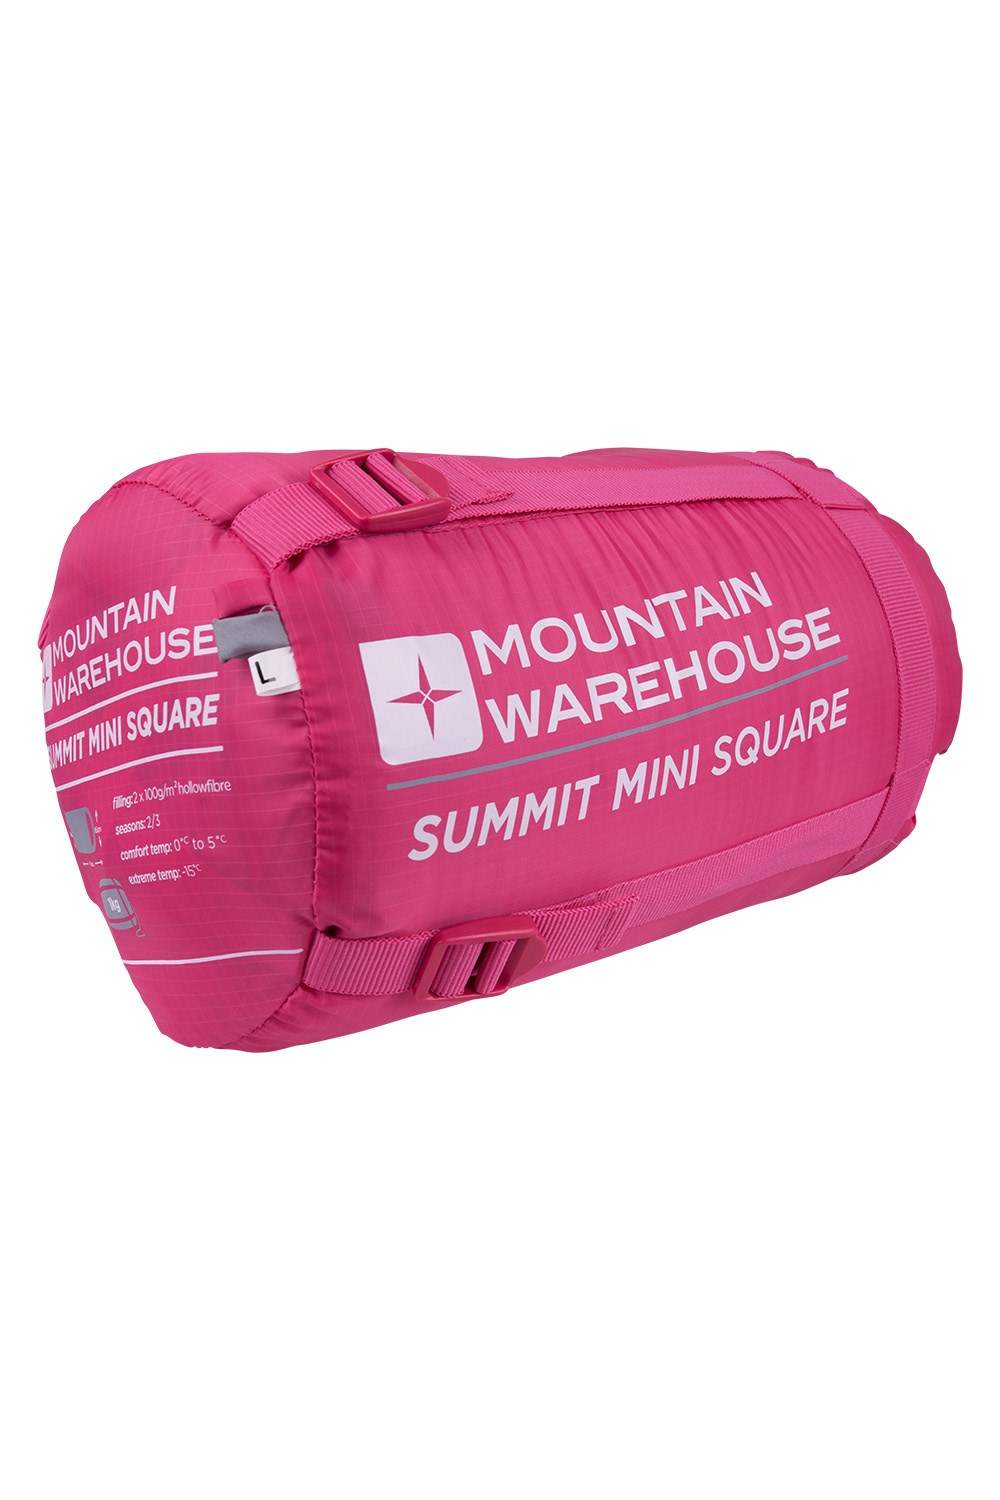 Mountain Warehouse SUMMIT MINI SQUARE SLEEPING BAG